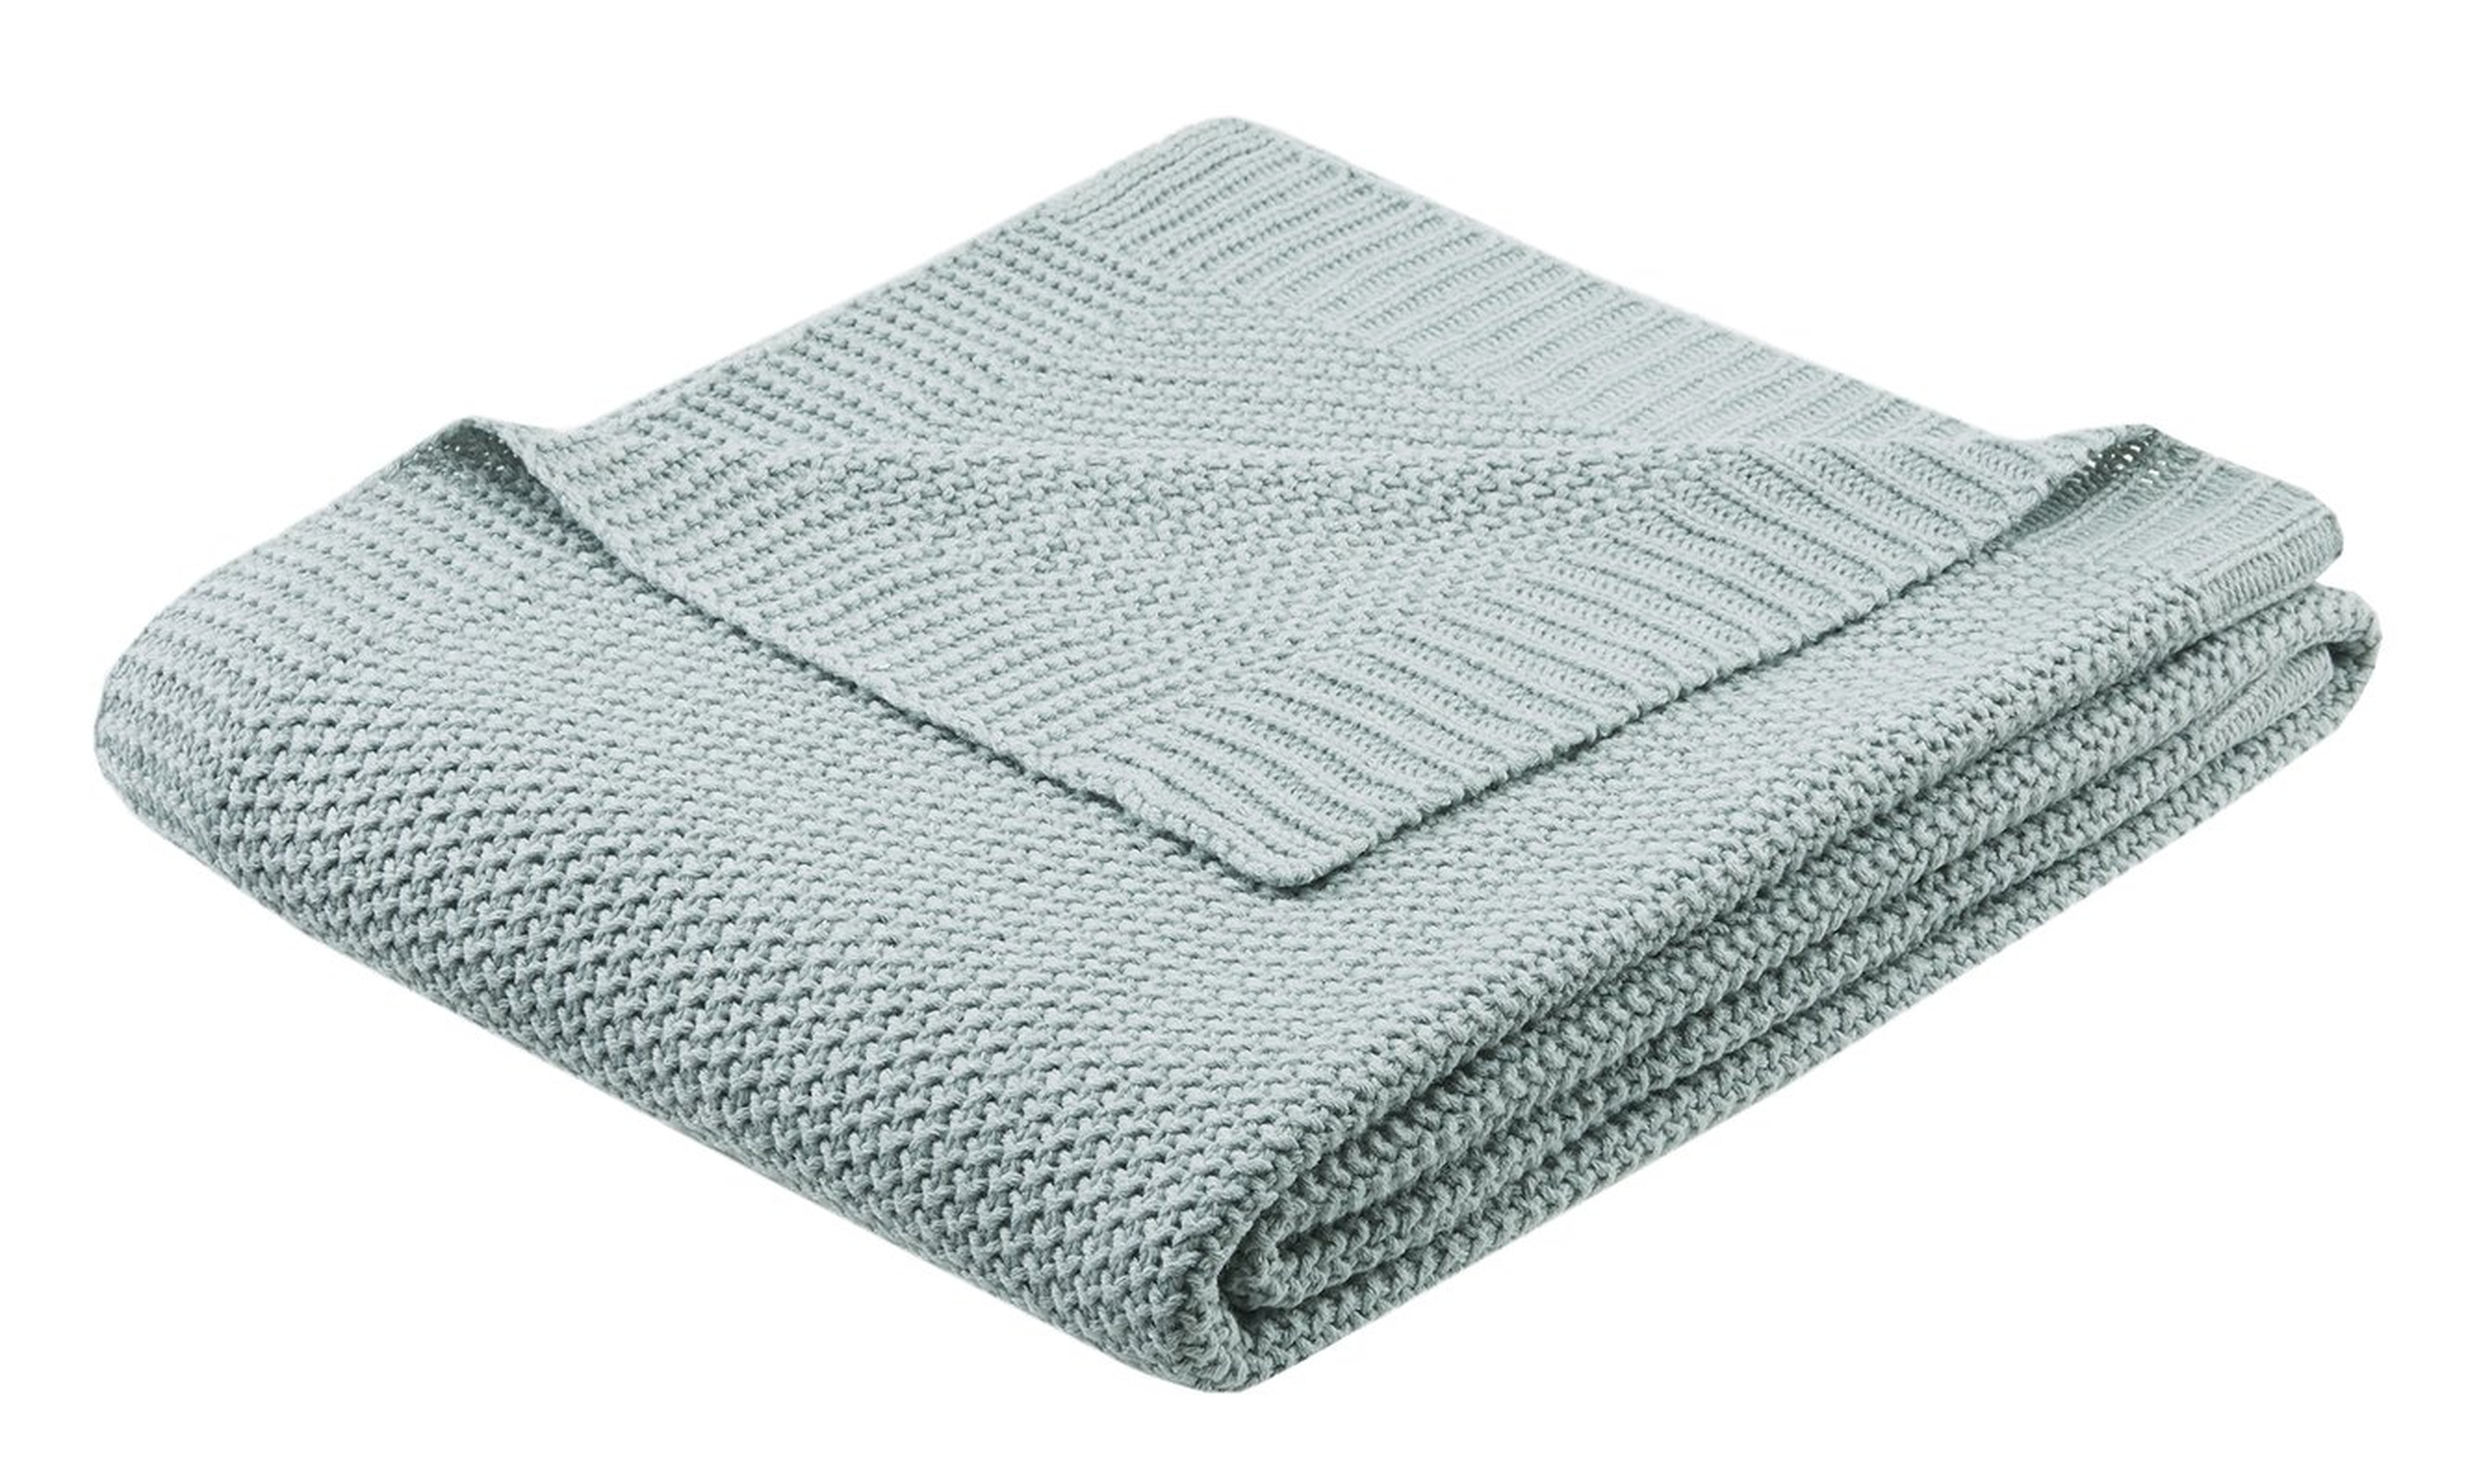 Elliott Knit Throw Blanket - Aqua - Wayfair